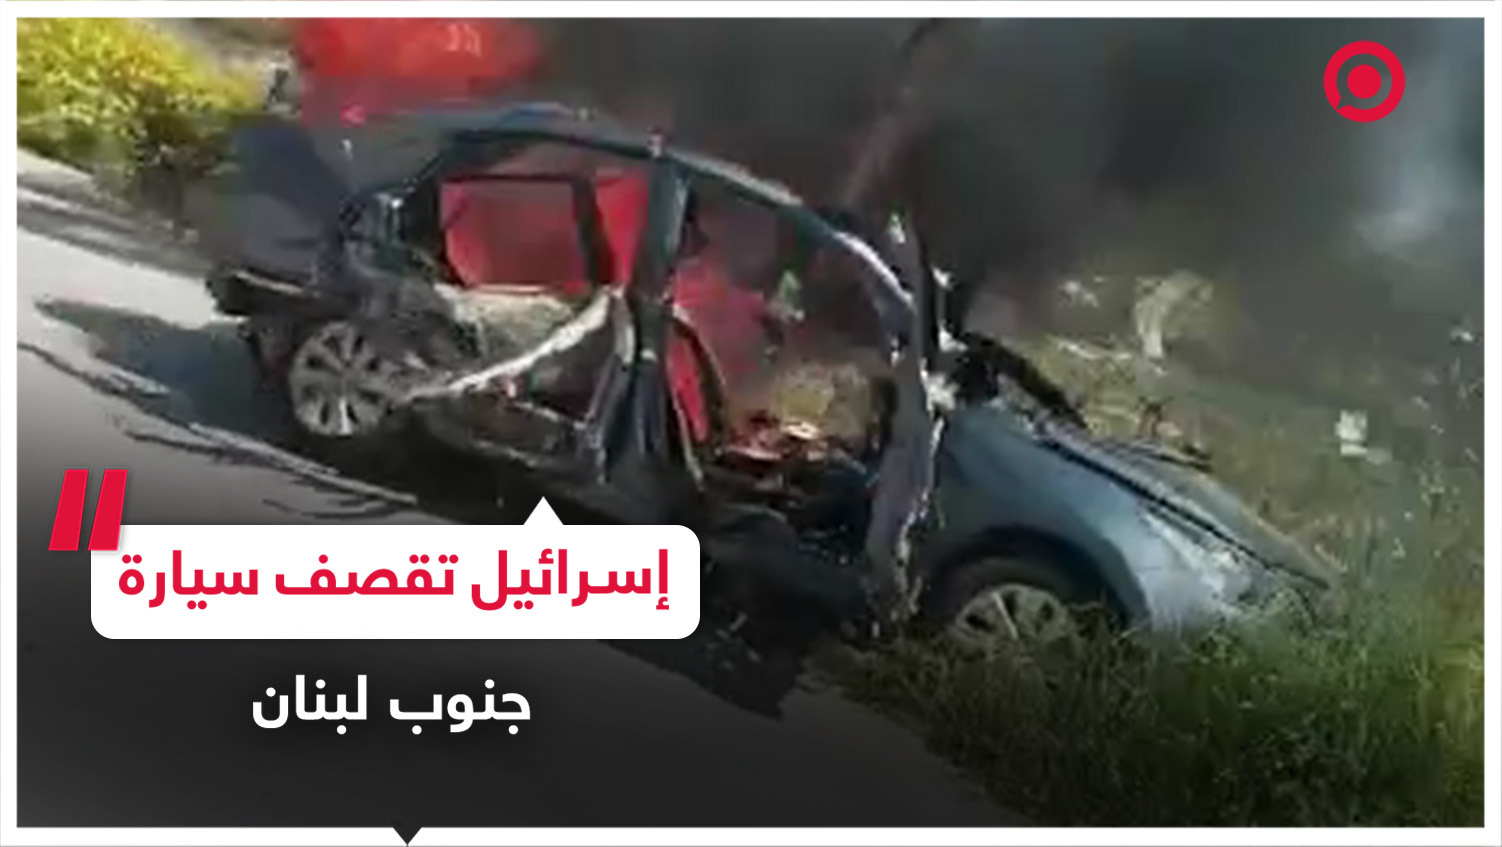 قصف إسرائيلي يستهدف سيارة بجنوب لبنان